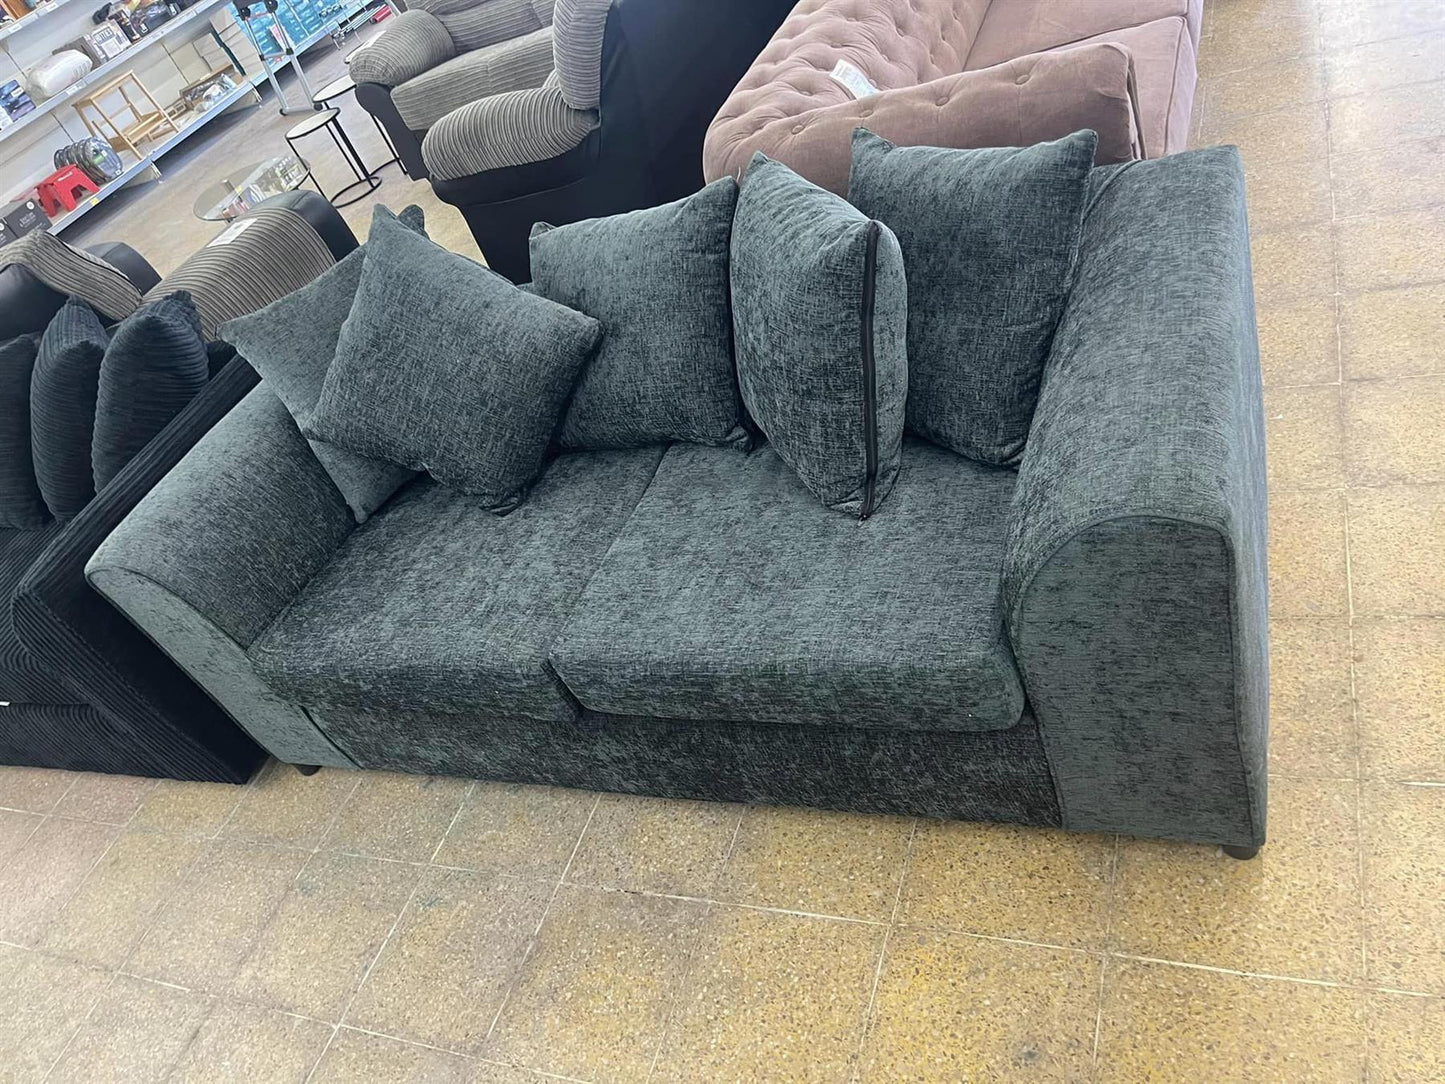 Grey Chenille 3 Seater Sofa